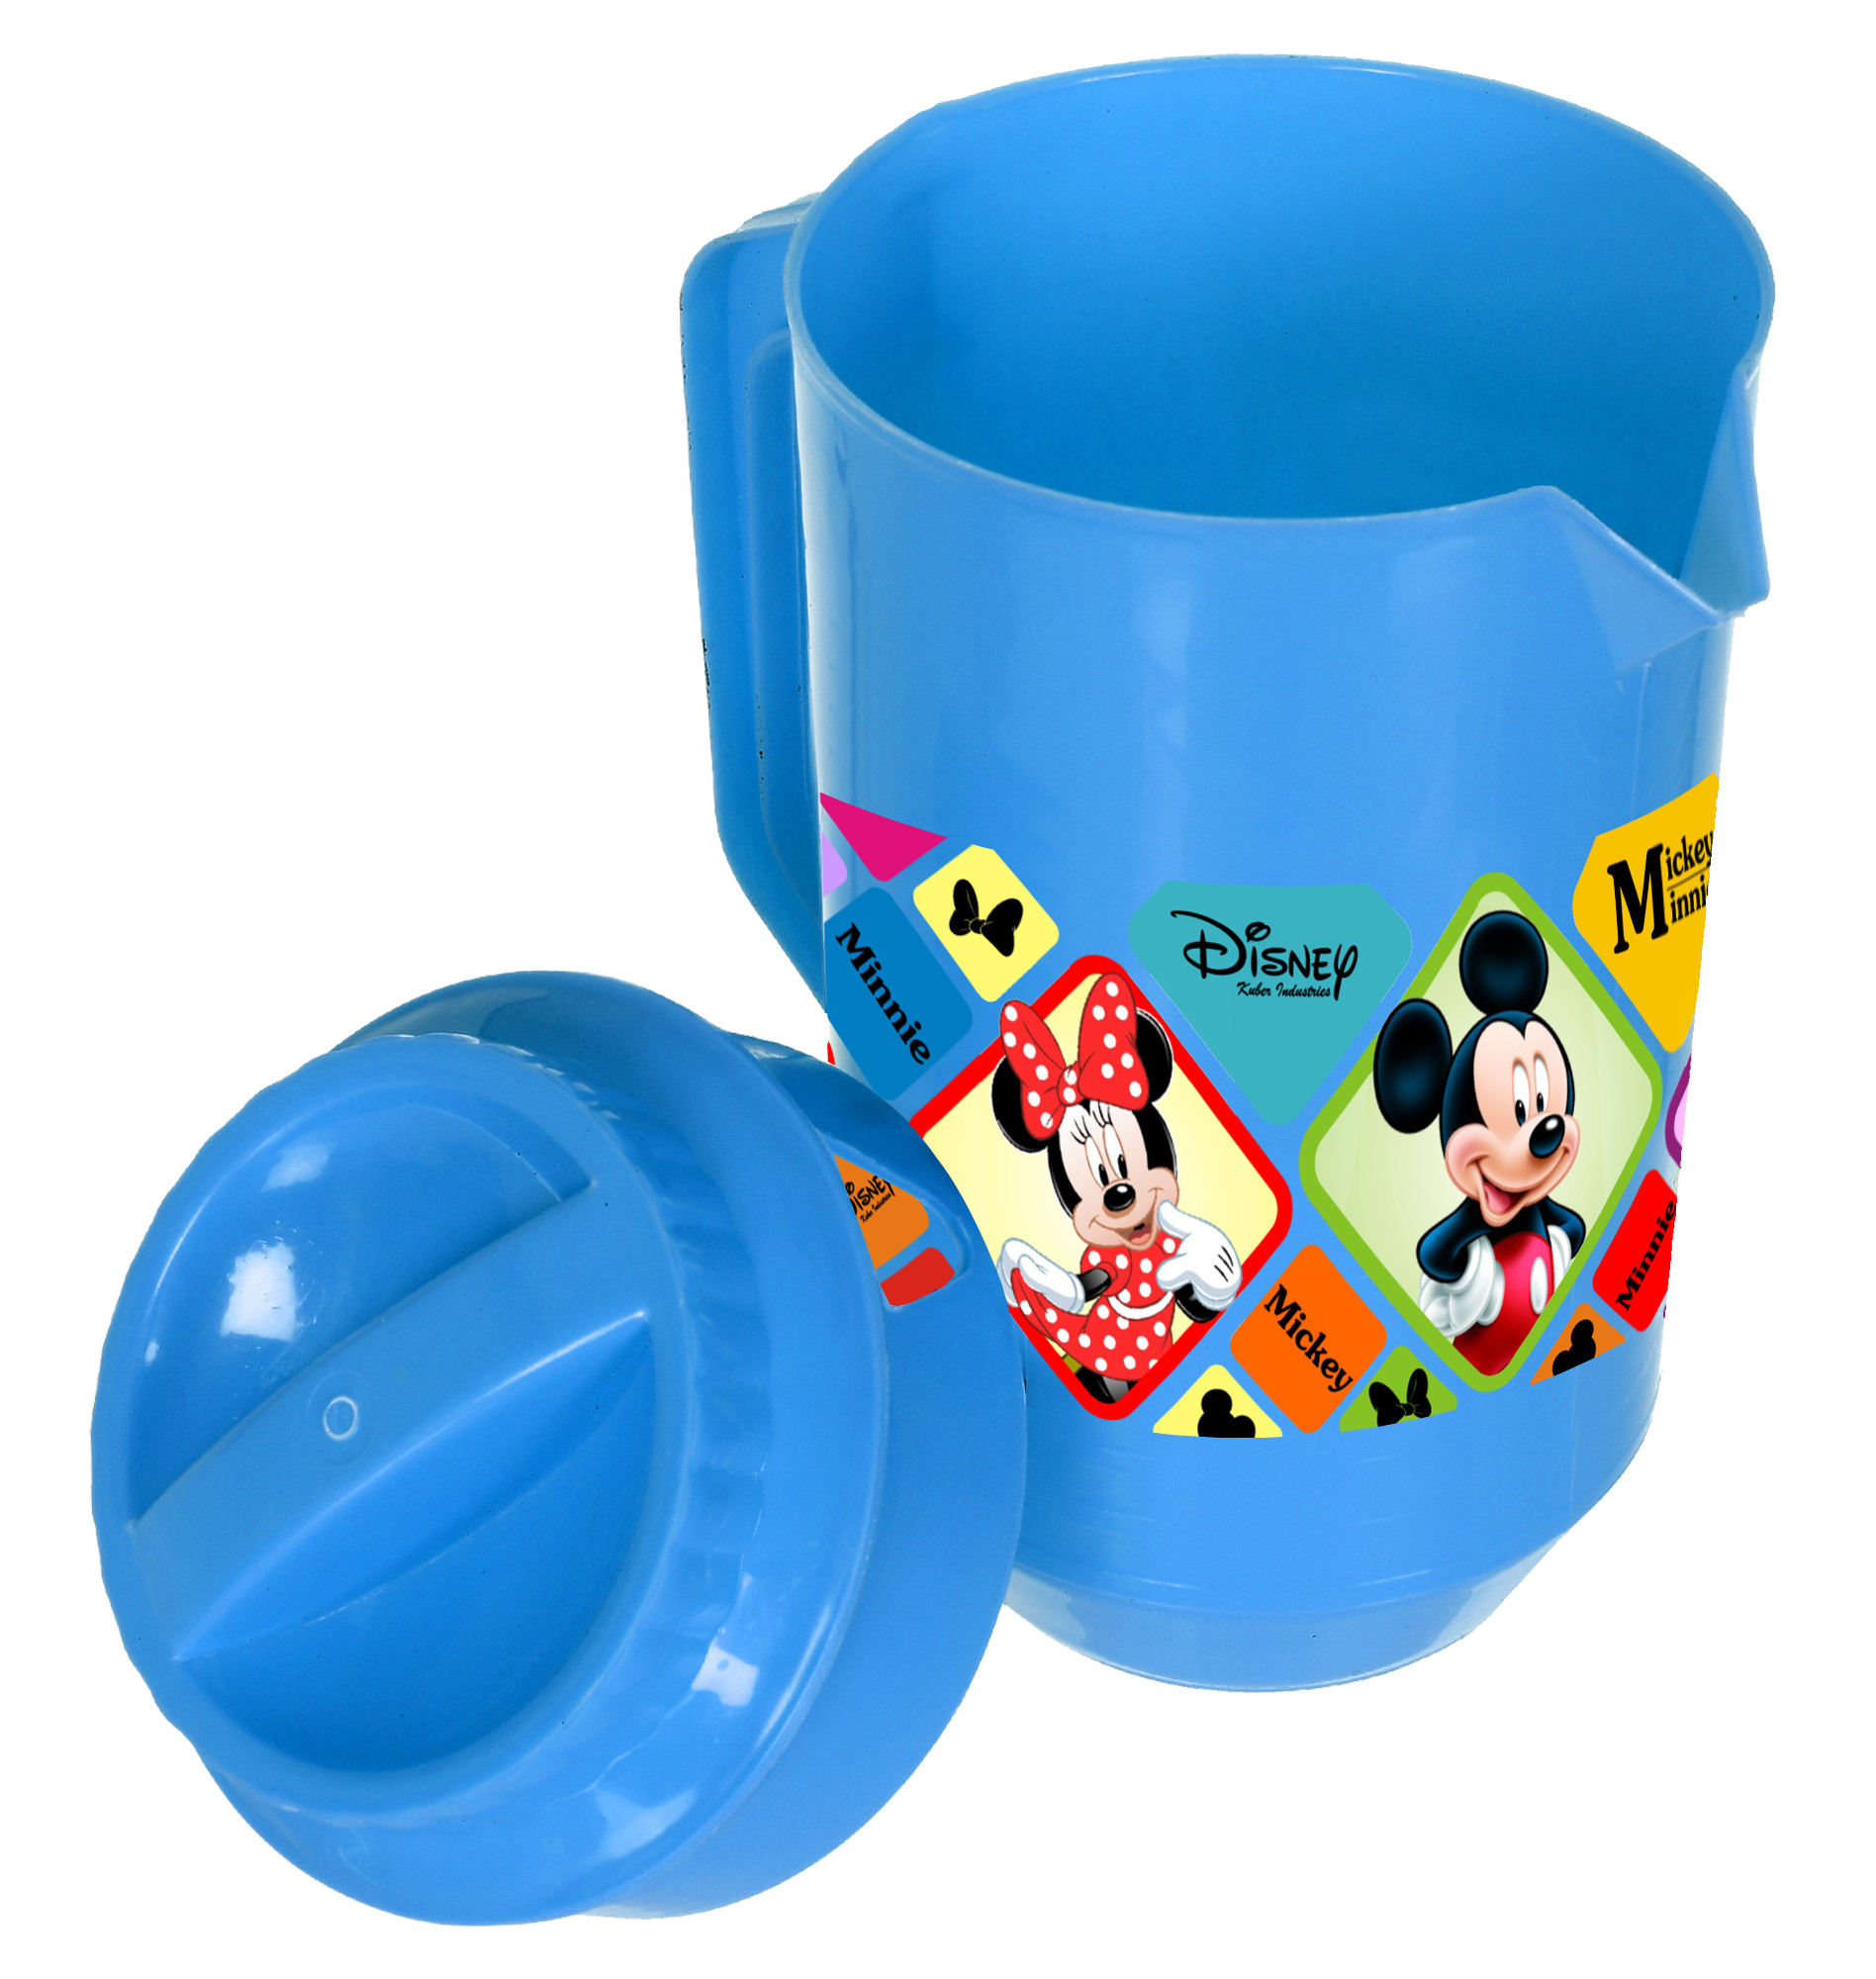 Kuber Industries Disney Mickey Minnie Print Unbreakable Multipurpose Plastic Water & Juice Jug With Lid,2 Ltr (Set of 3,Pink & Cream & Blue)